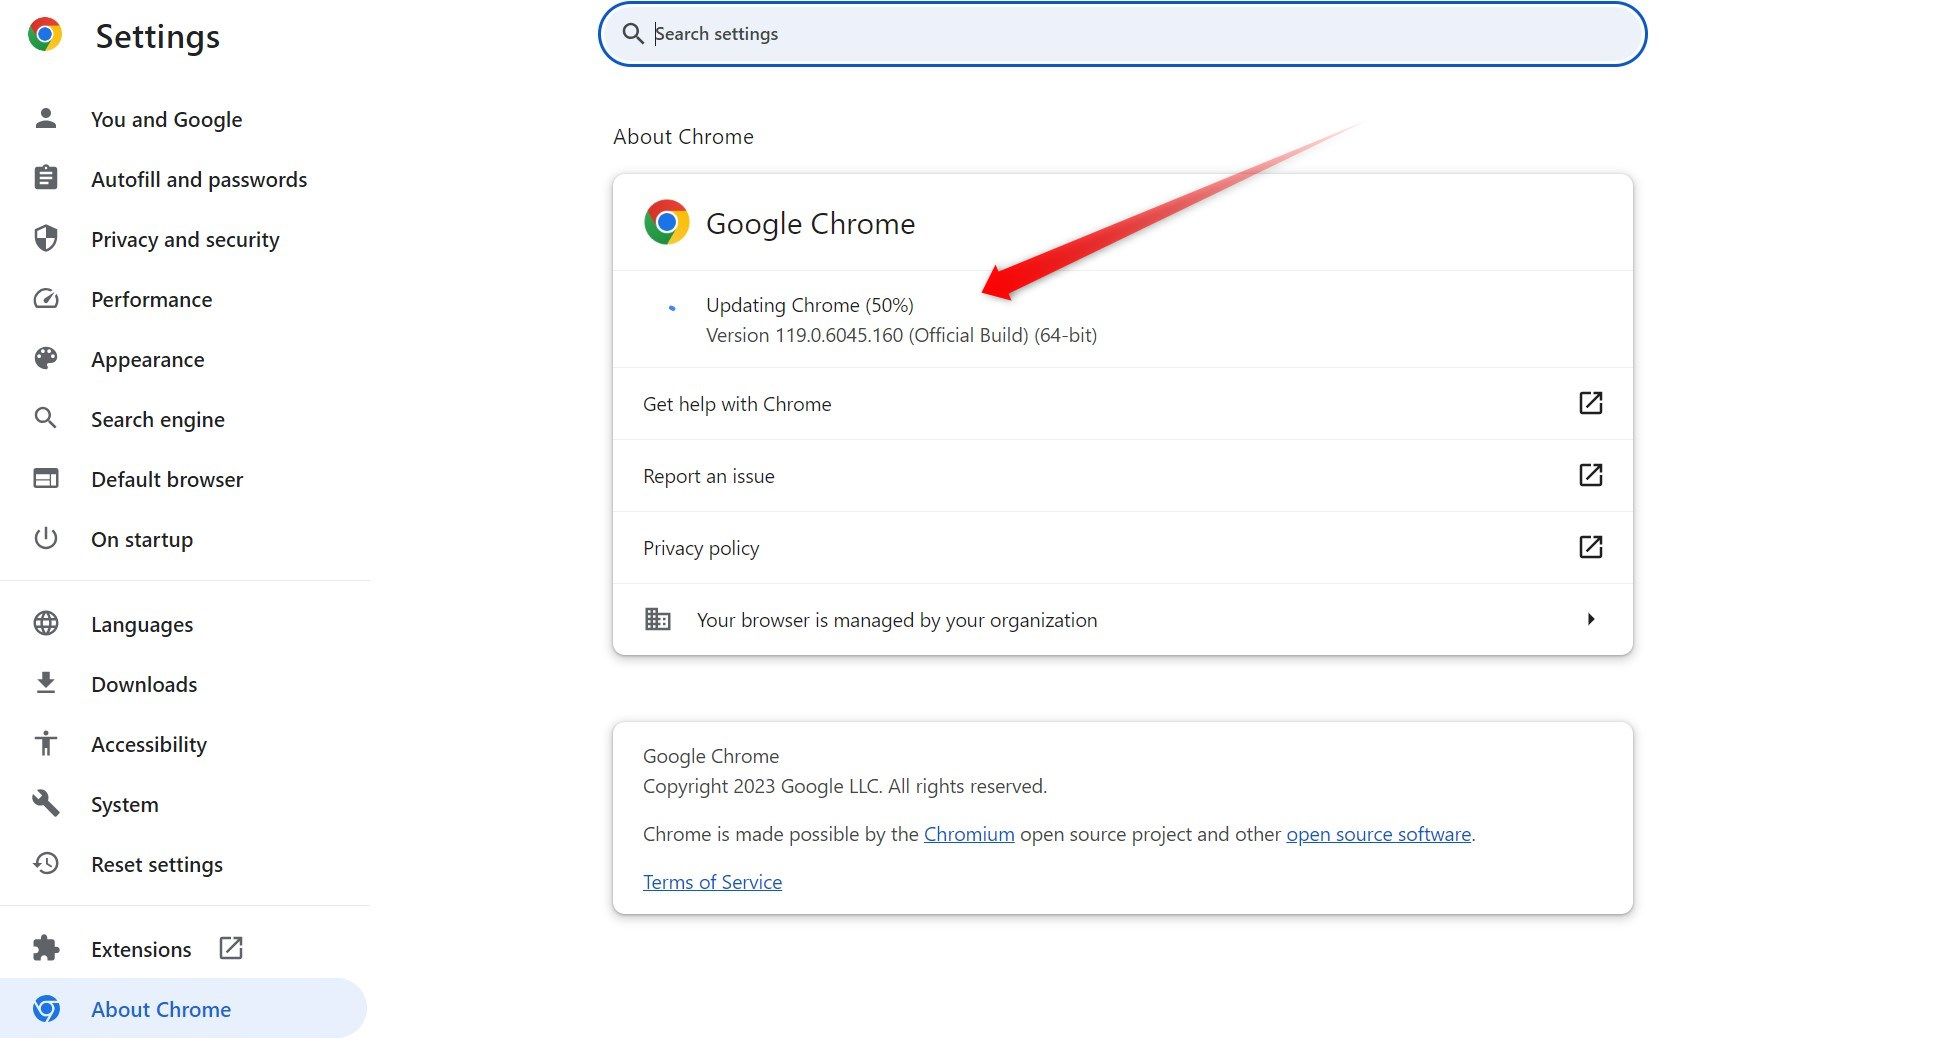 Google Chrome update in progress